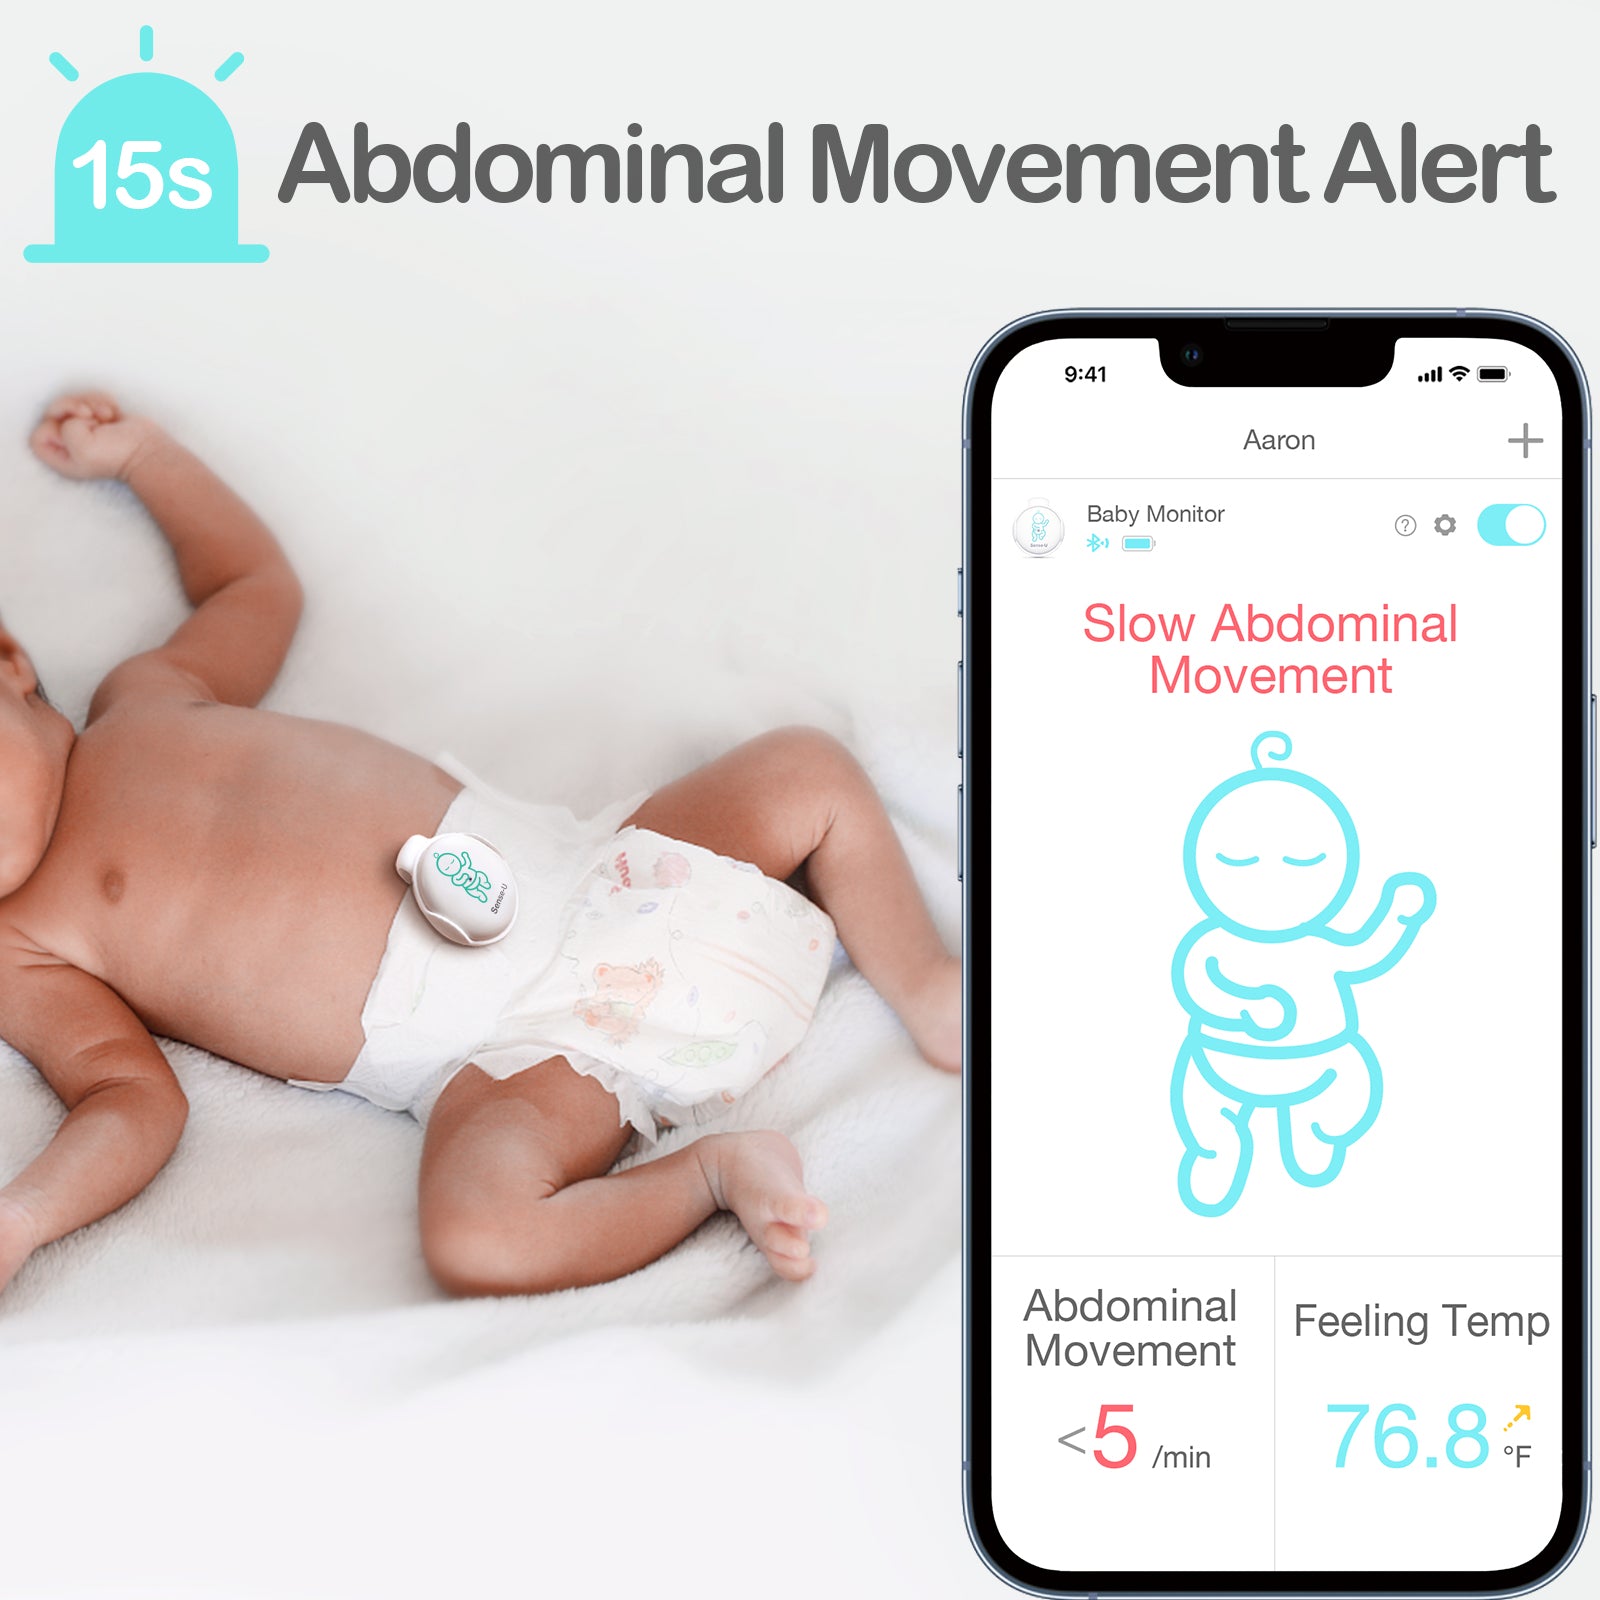 Sense-U Baby Monitor